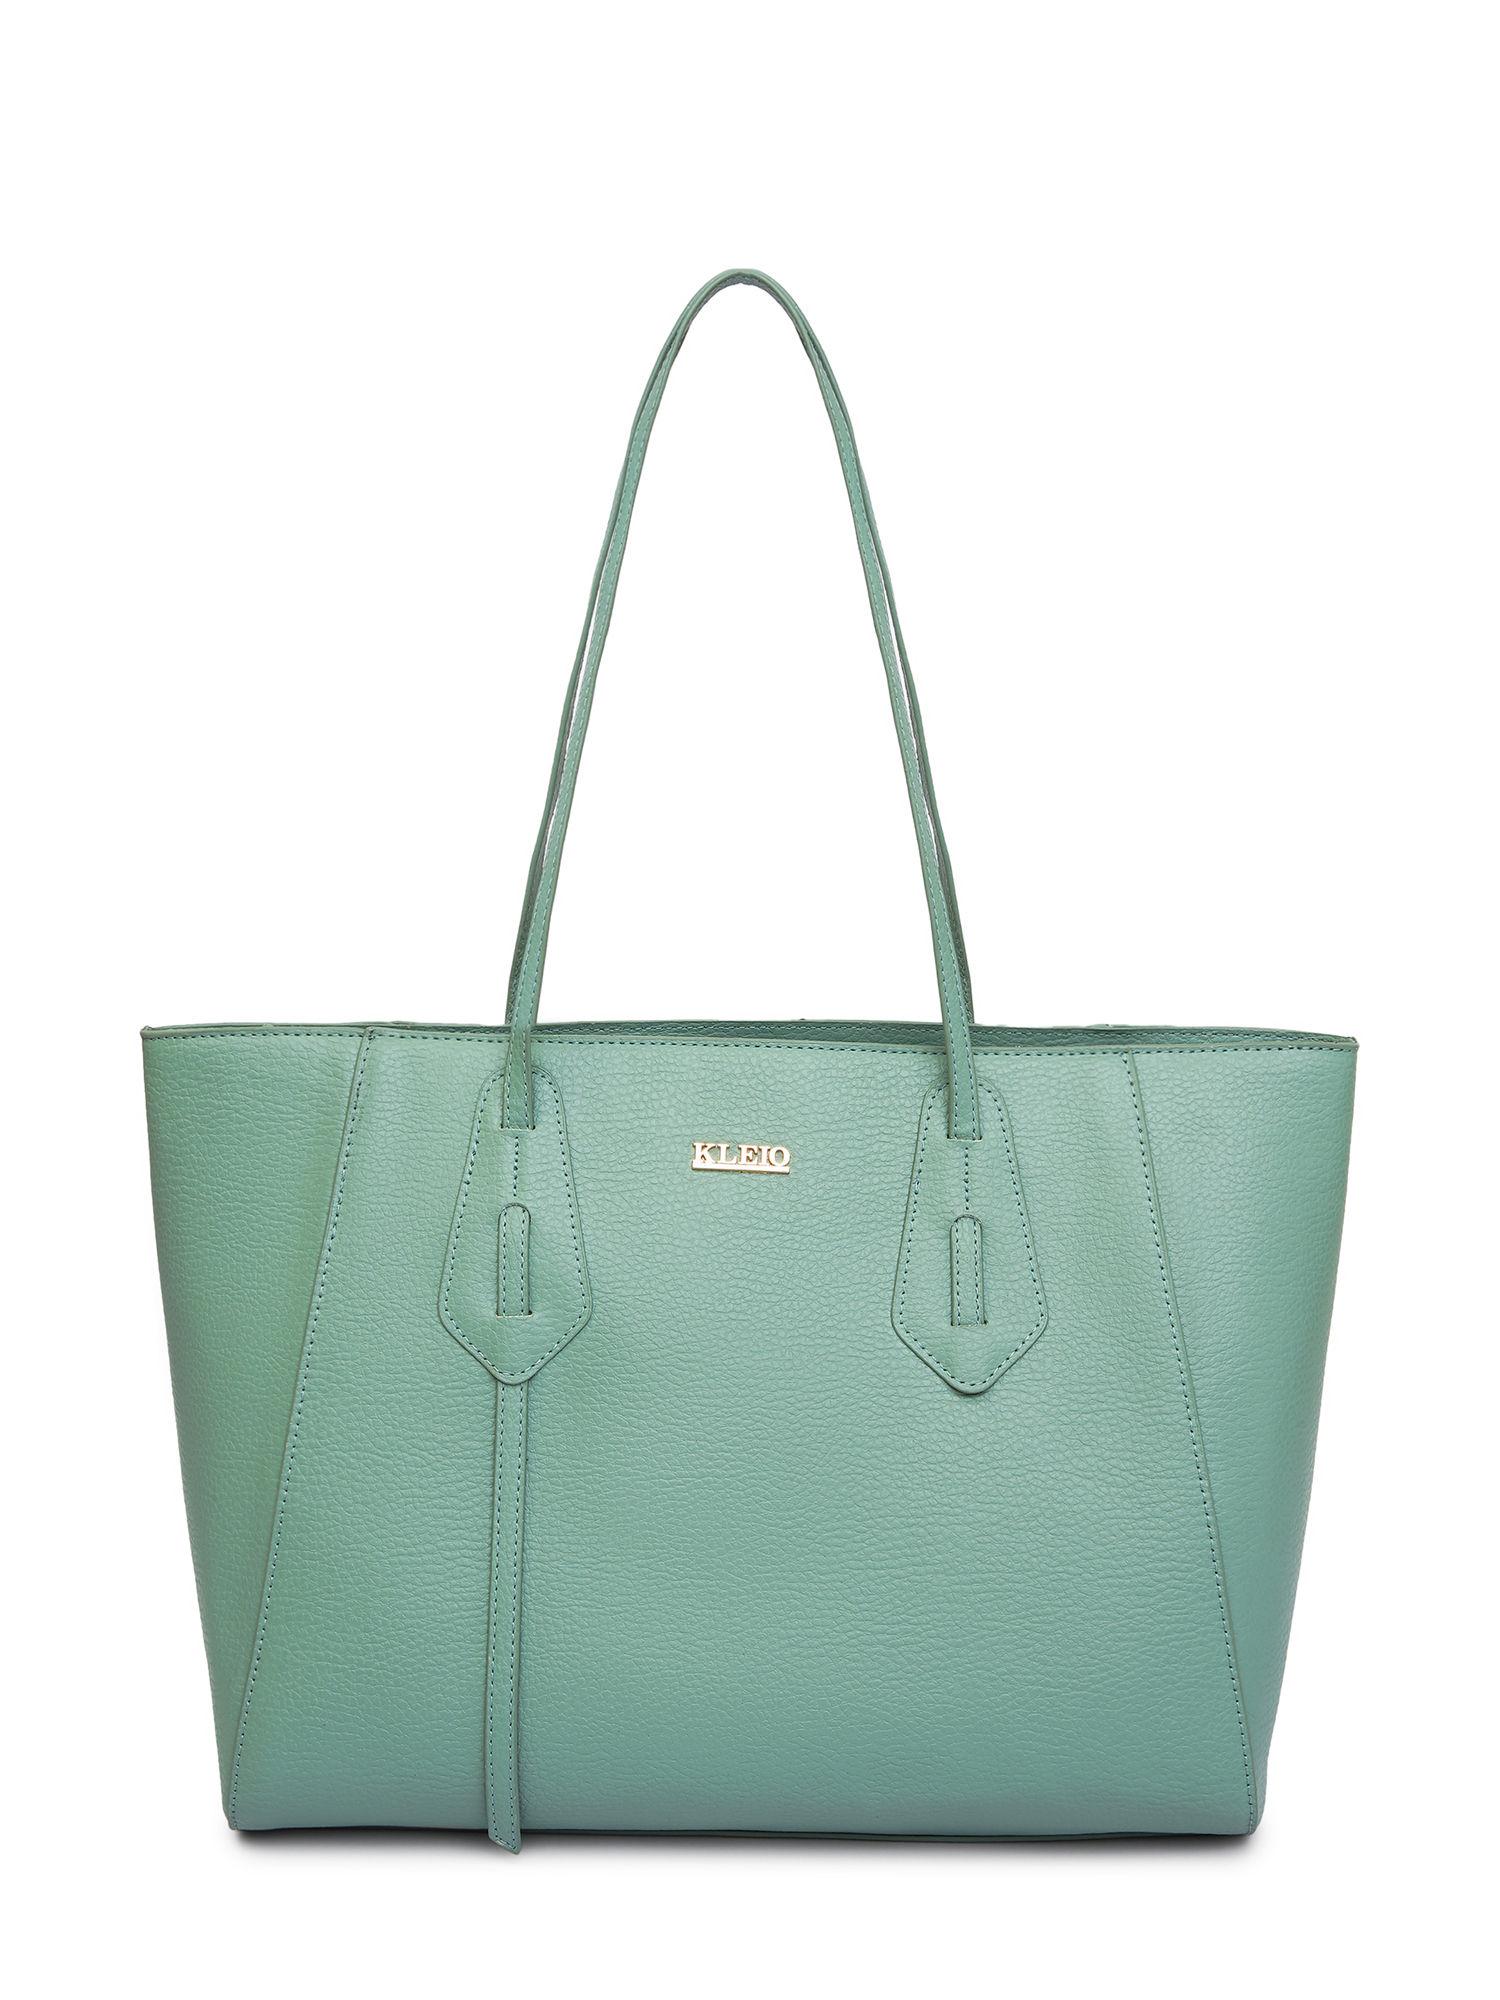 vegan leather zipper tote handbag with laptop compatment14" sleek for women - green